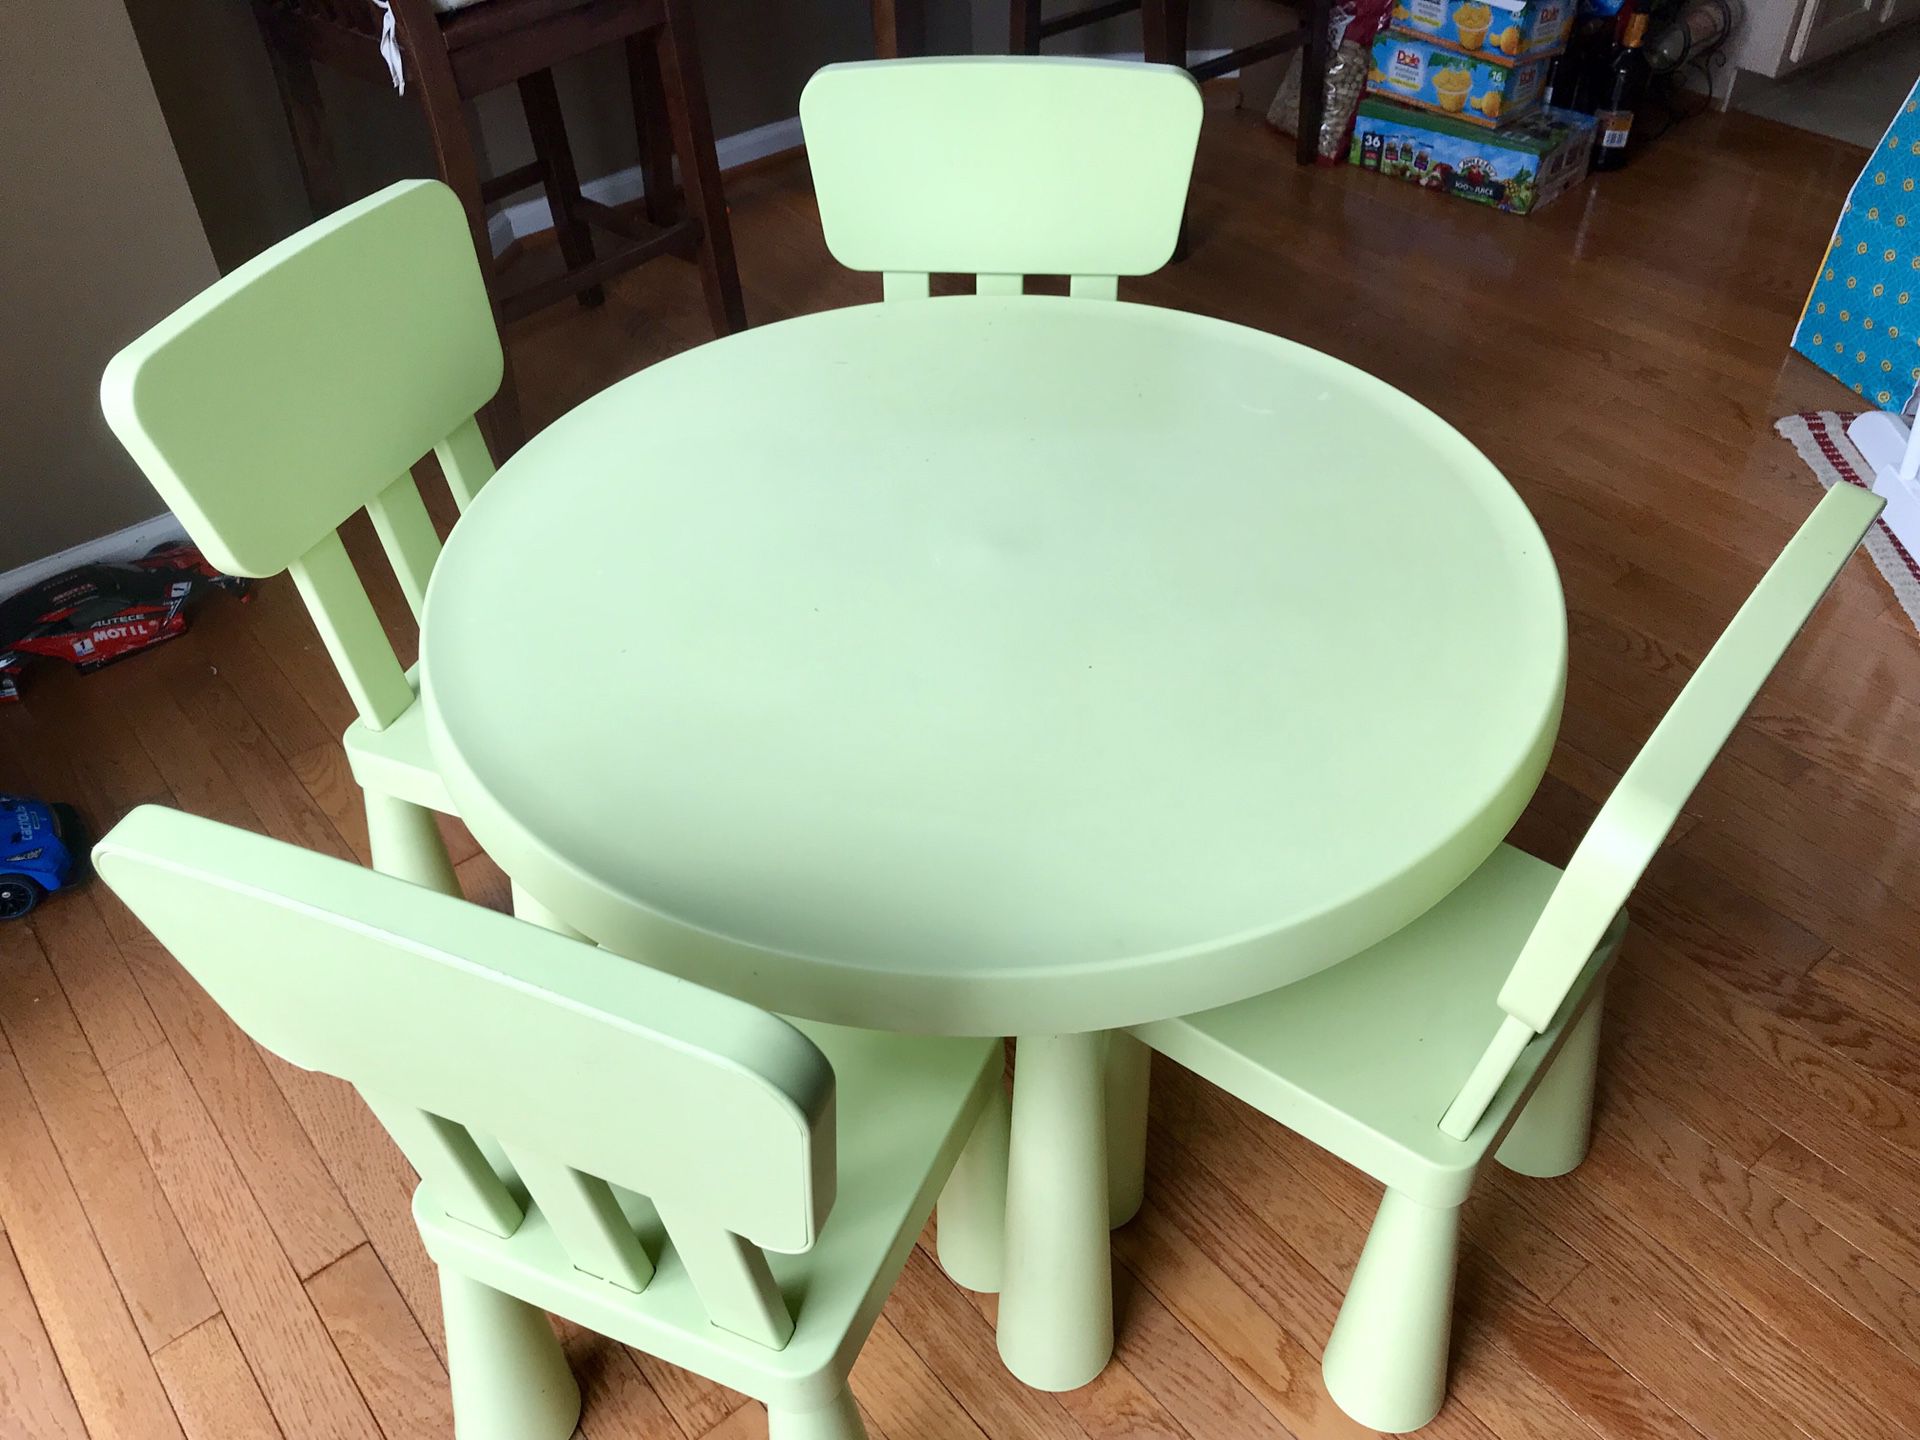 Children’s table set